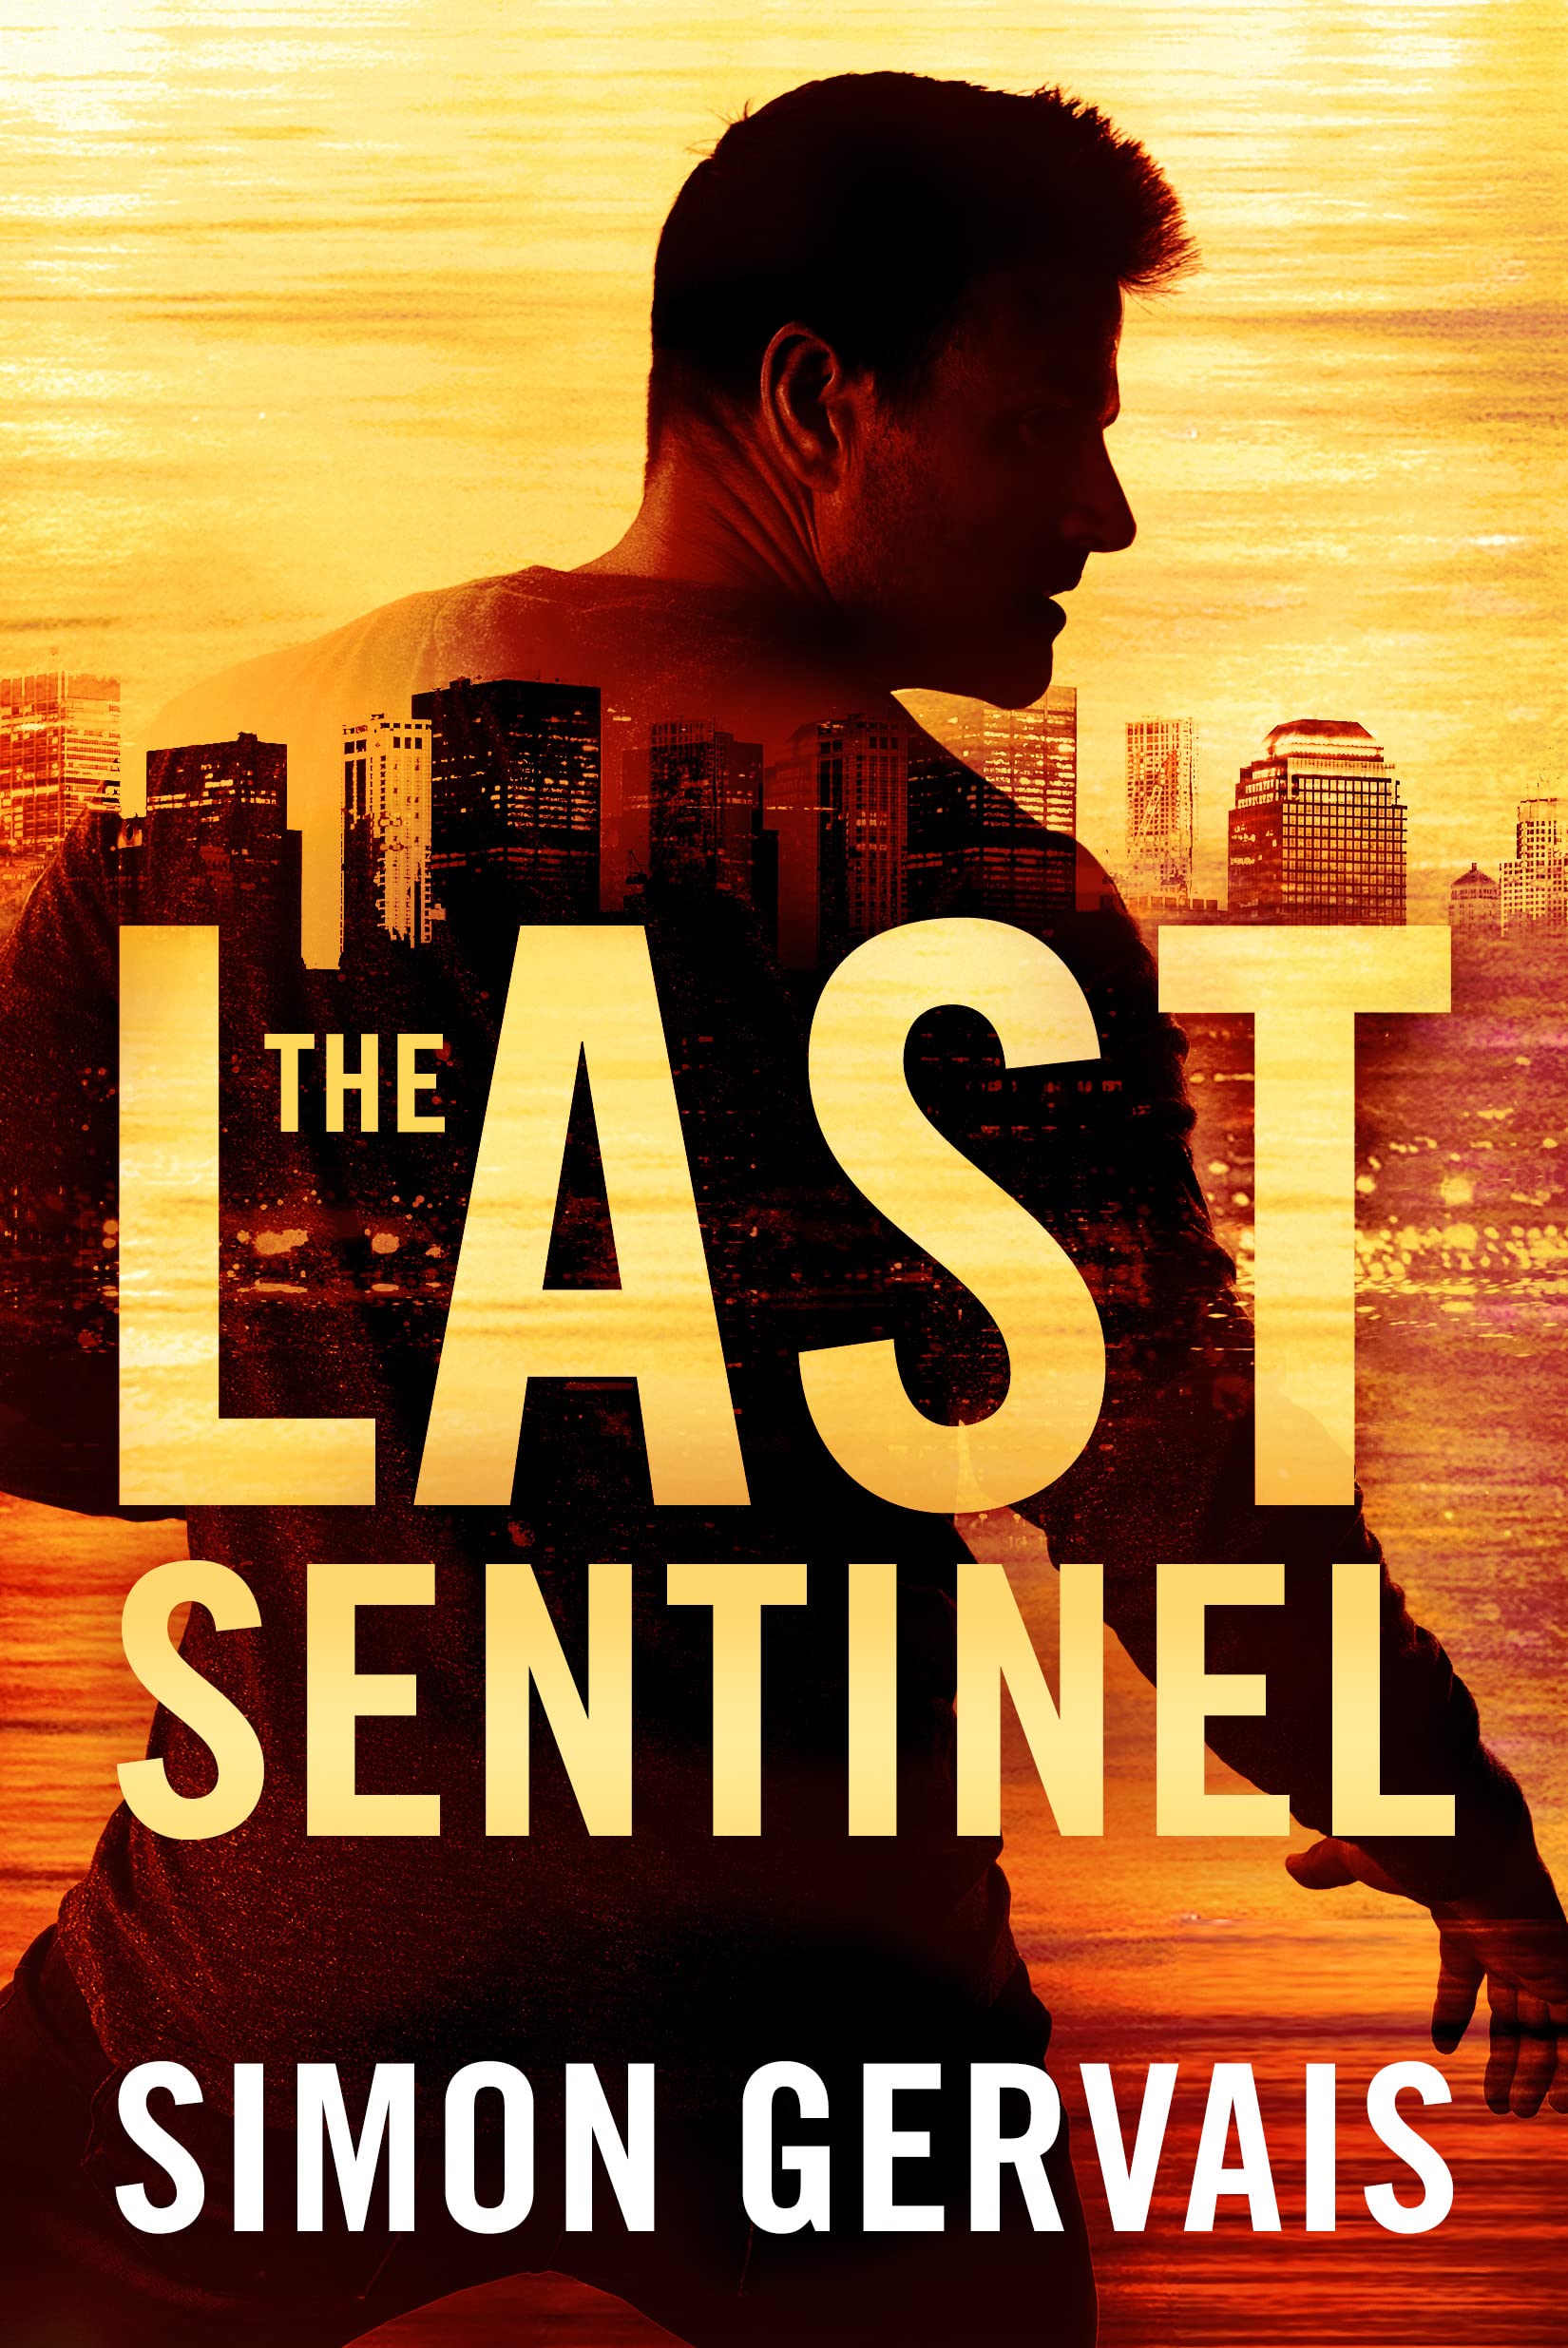 The Last Sentinel (Clayton White Book 2)